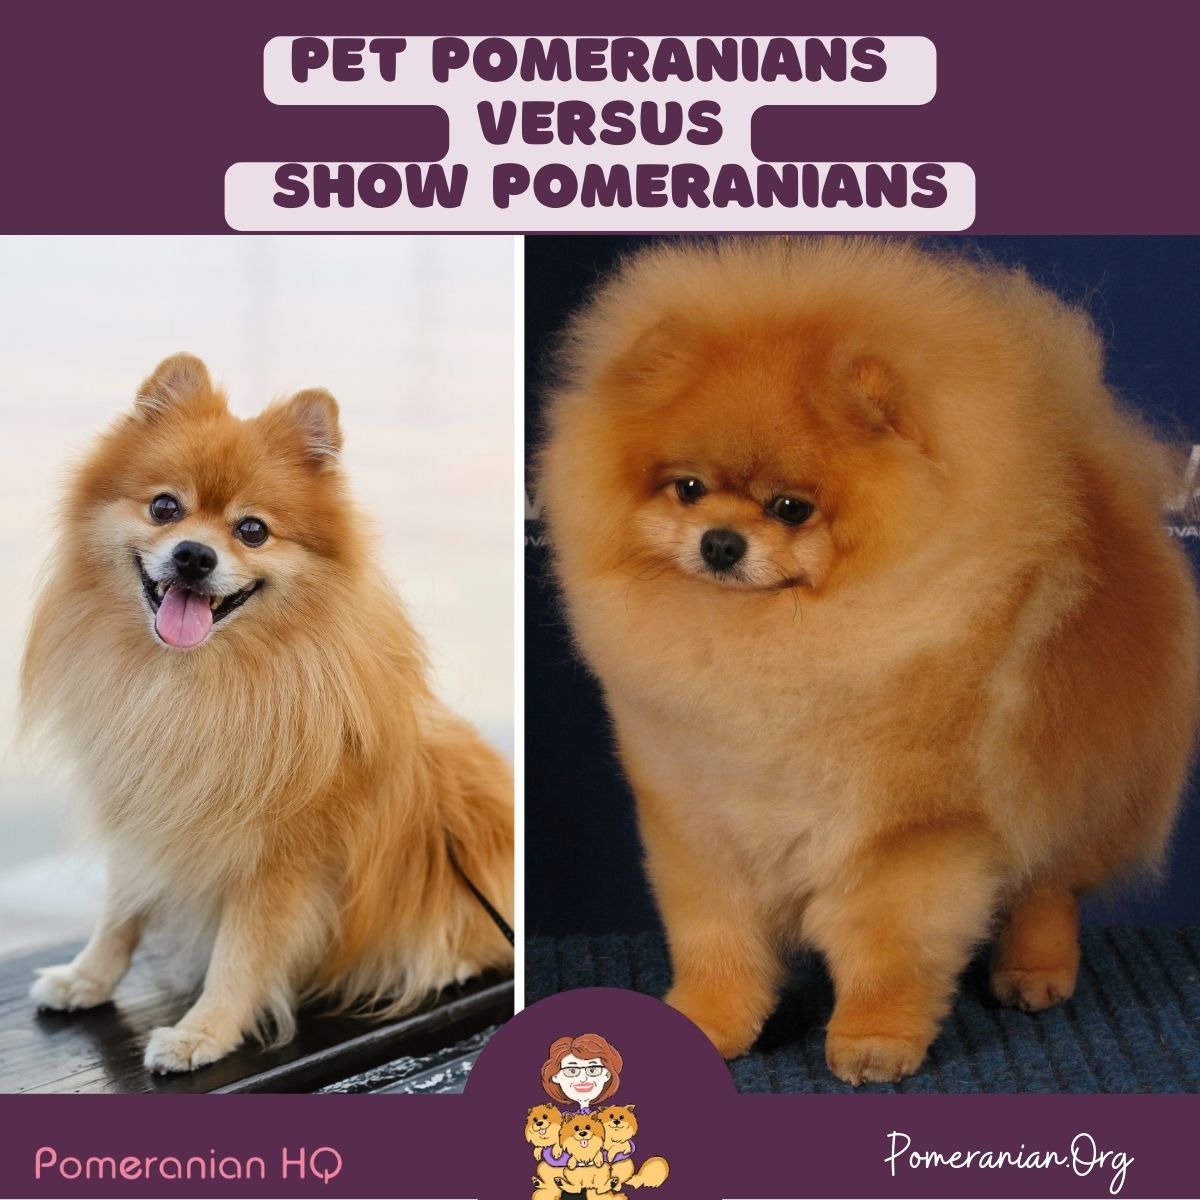 Show Pomeranians And Pet Pomeranians